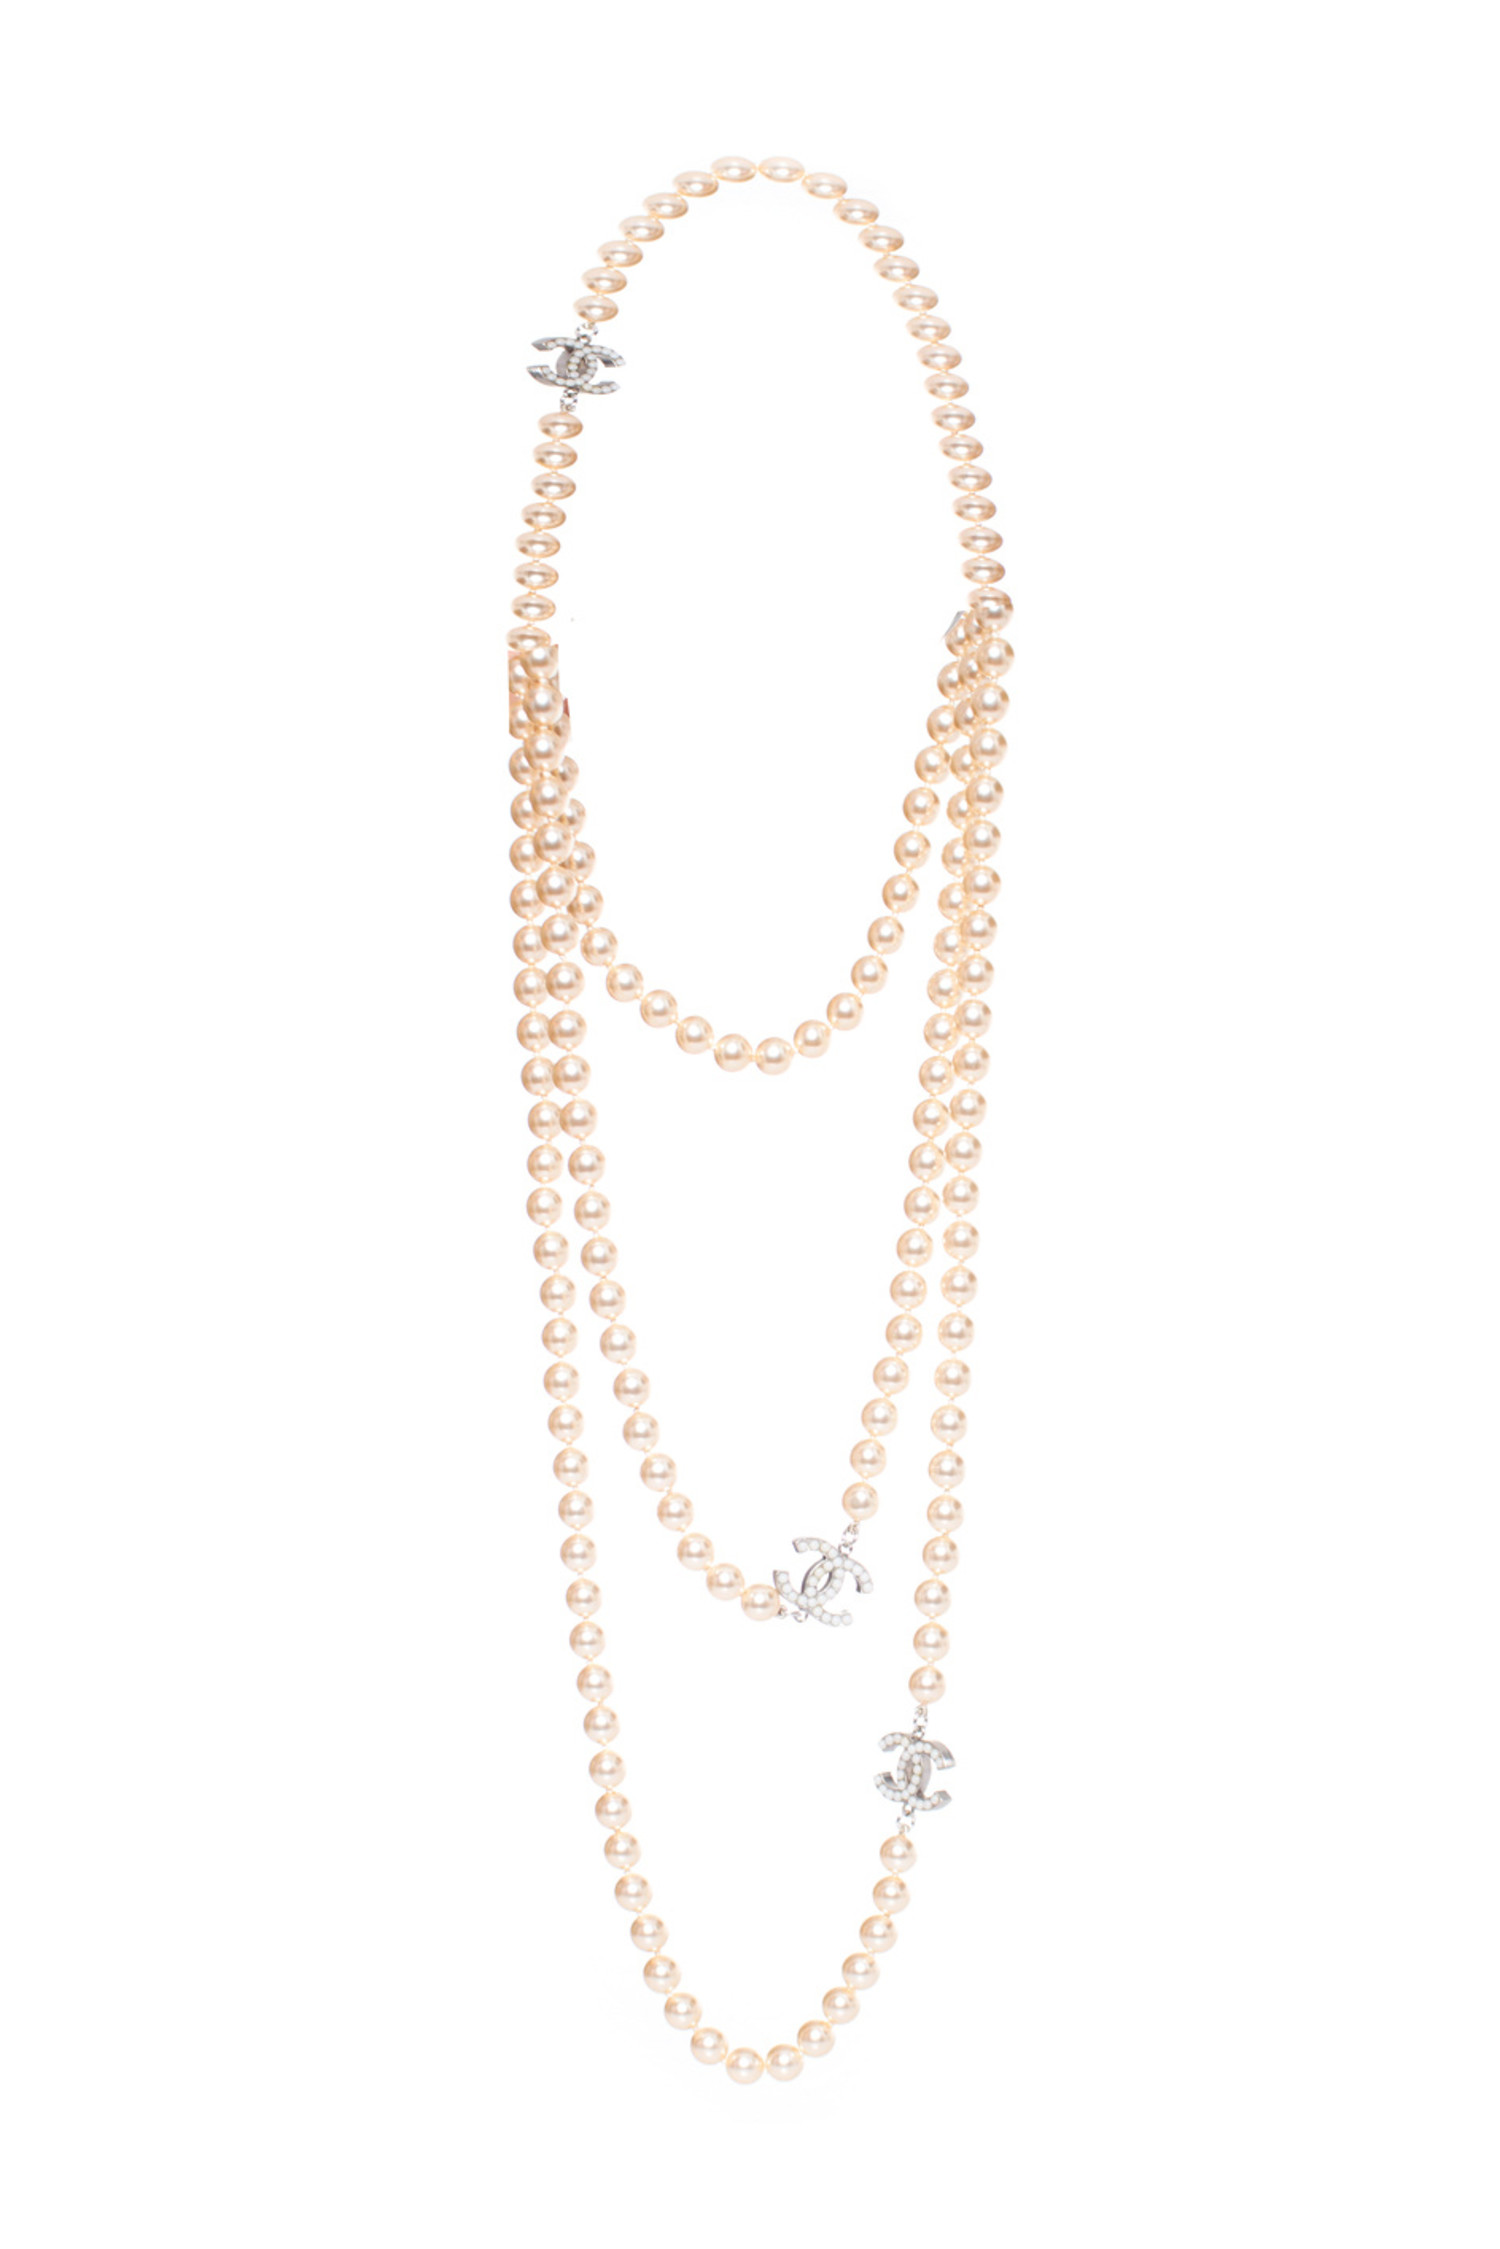 Chanel Cc Long Faux Pearl Necklace